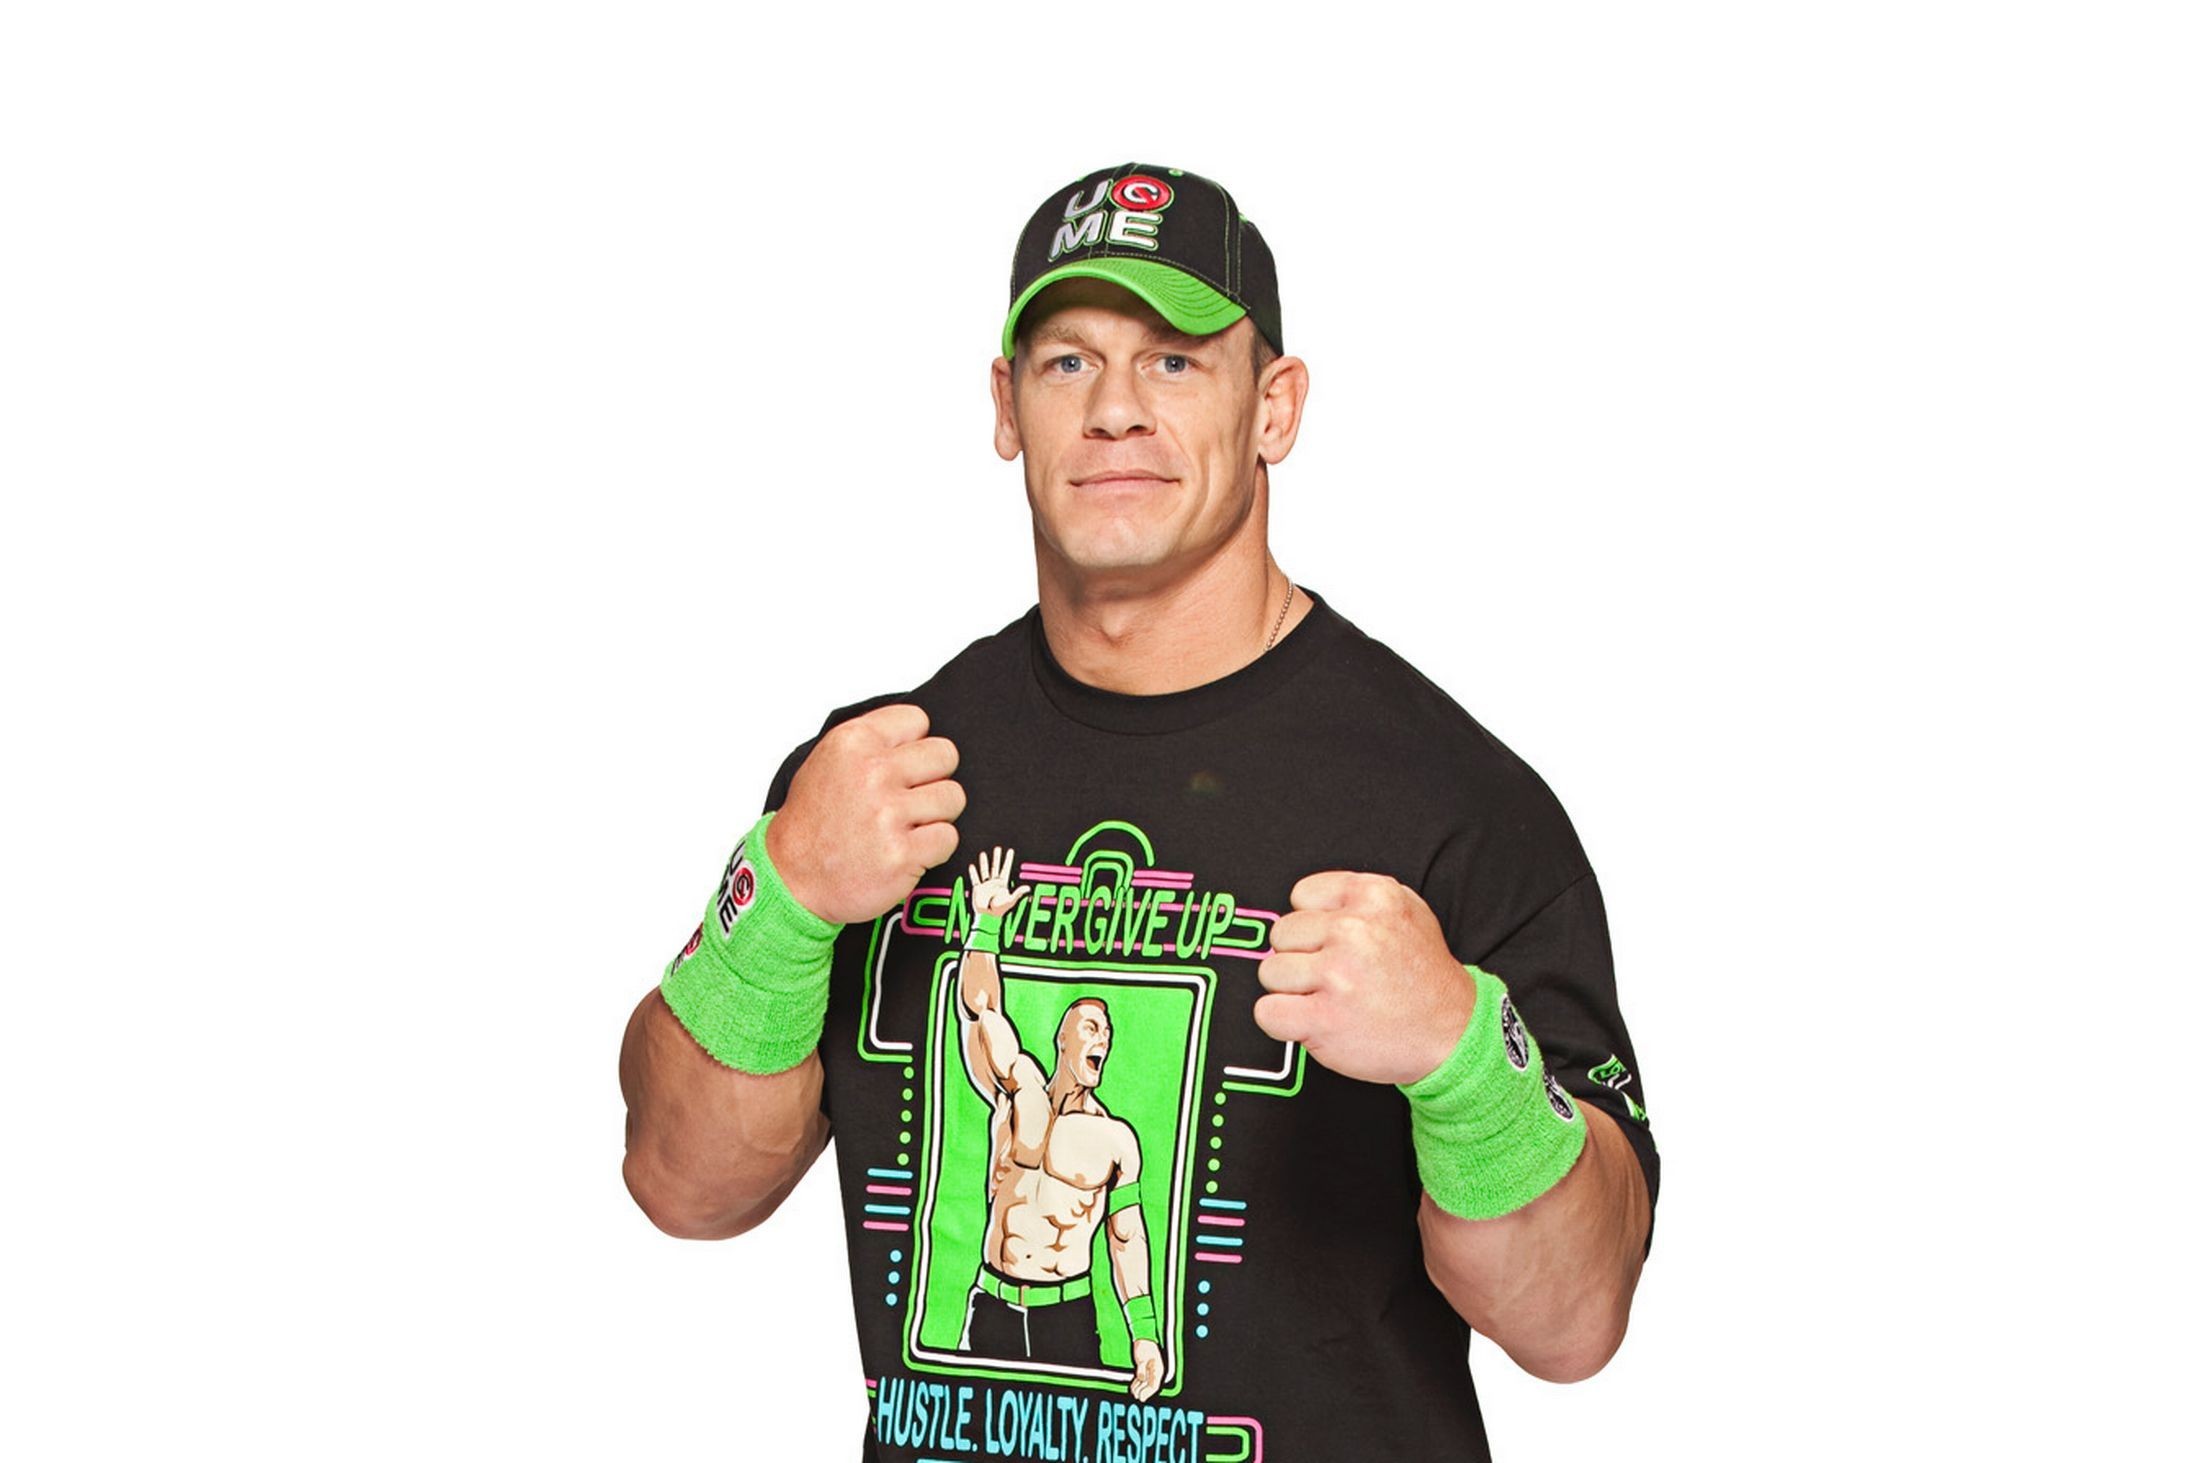 John Cena New HD Wallpaper Image